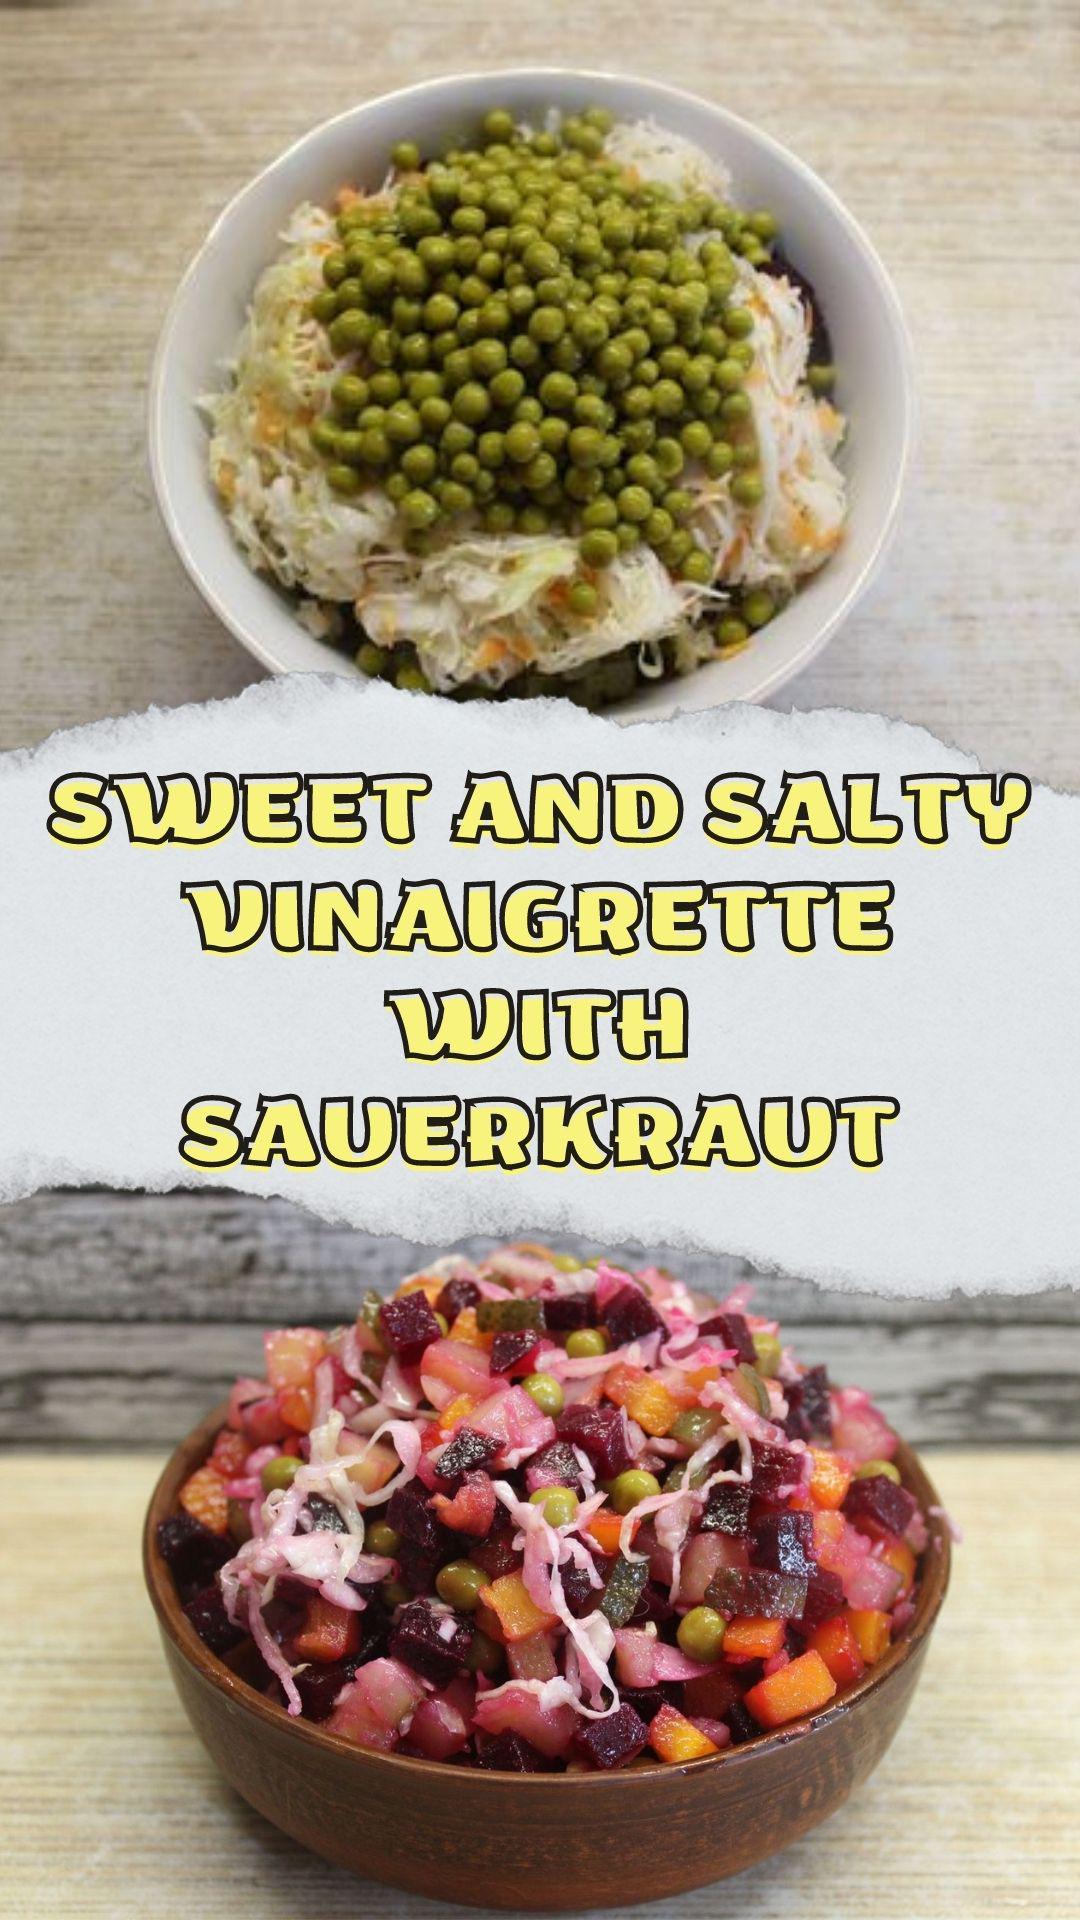 Sweet and salty vinaigrette with sauerkraut